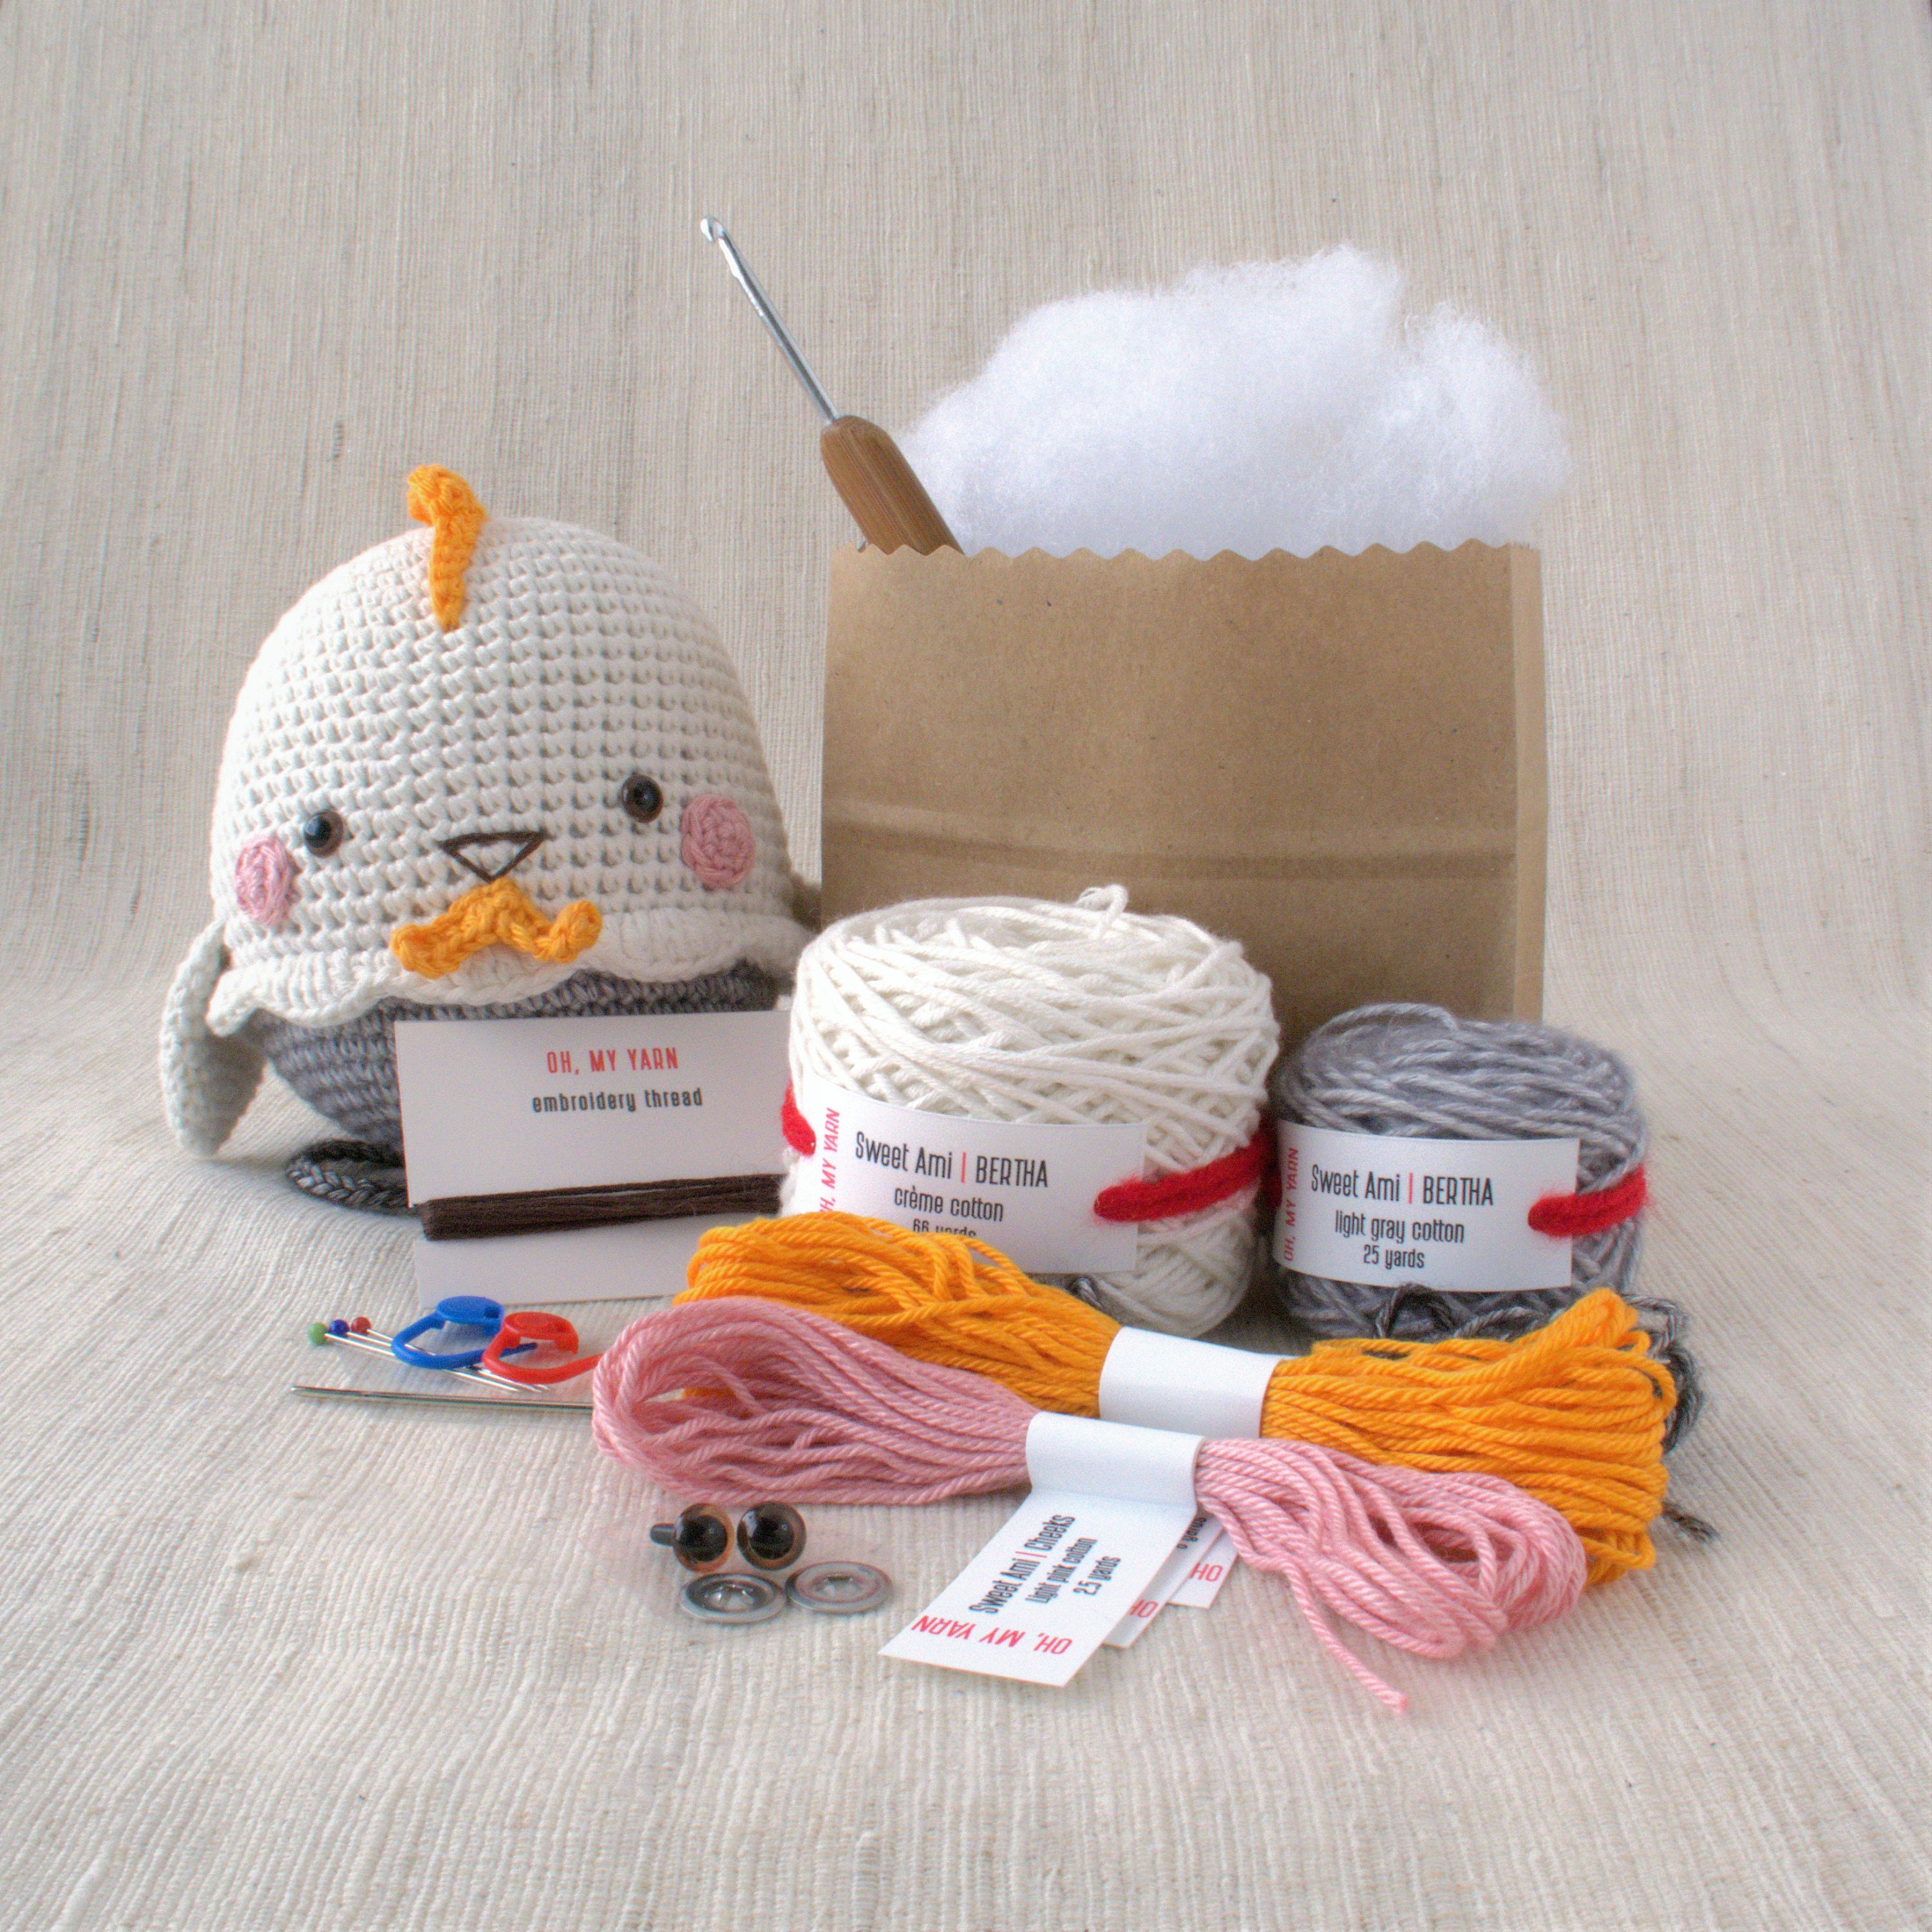 BEGINNER CROCHET KIT Amigurumi Cow, Easy Starter Crochet Kit, Amigurumi  Kit, Diy Craft Kit Gift, Learn How to Crochet Kit, Amigurumi Cow 